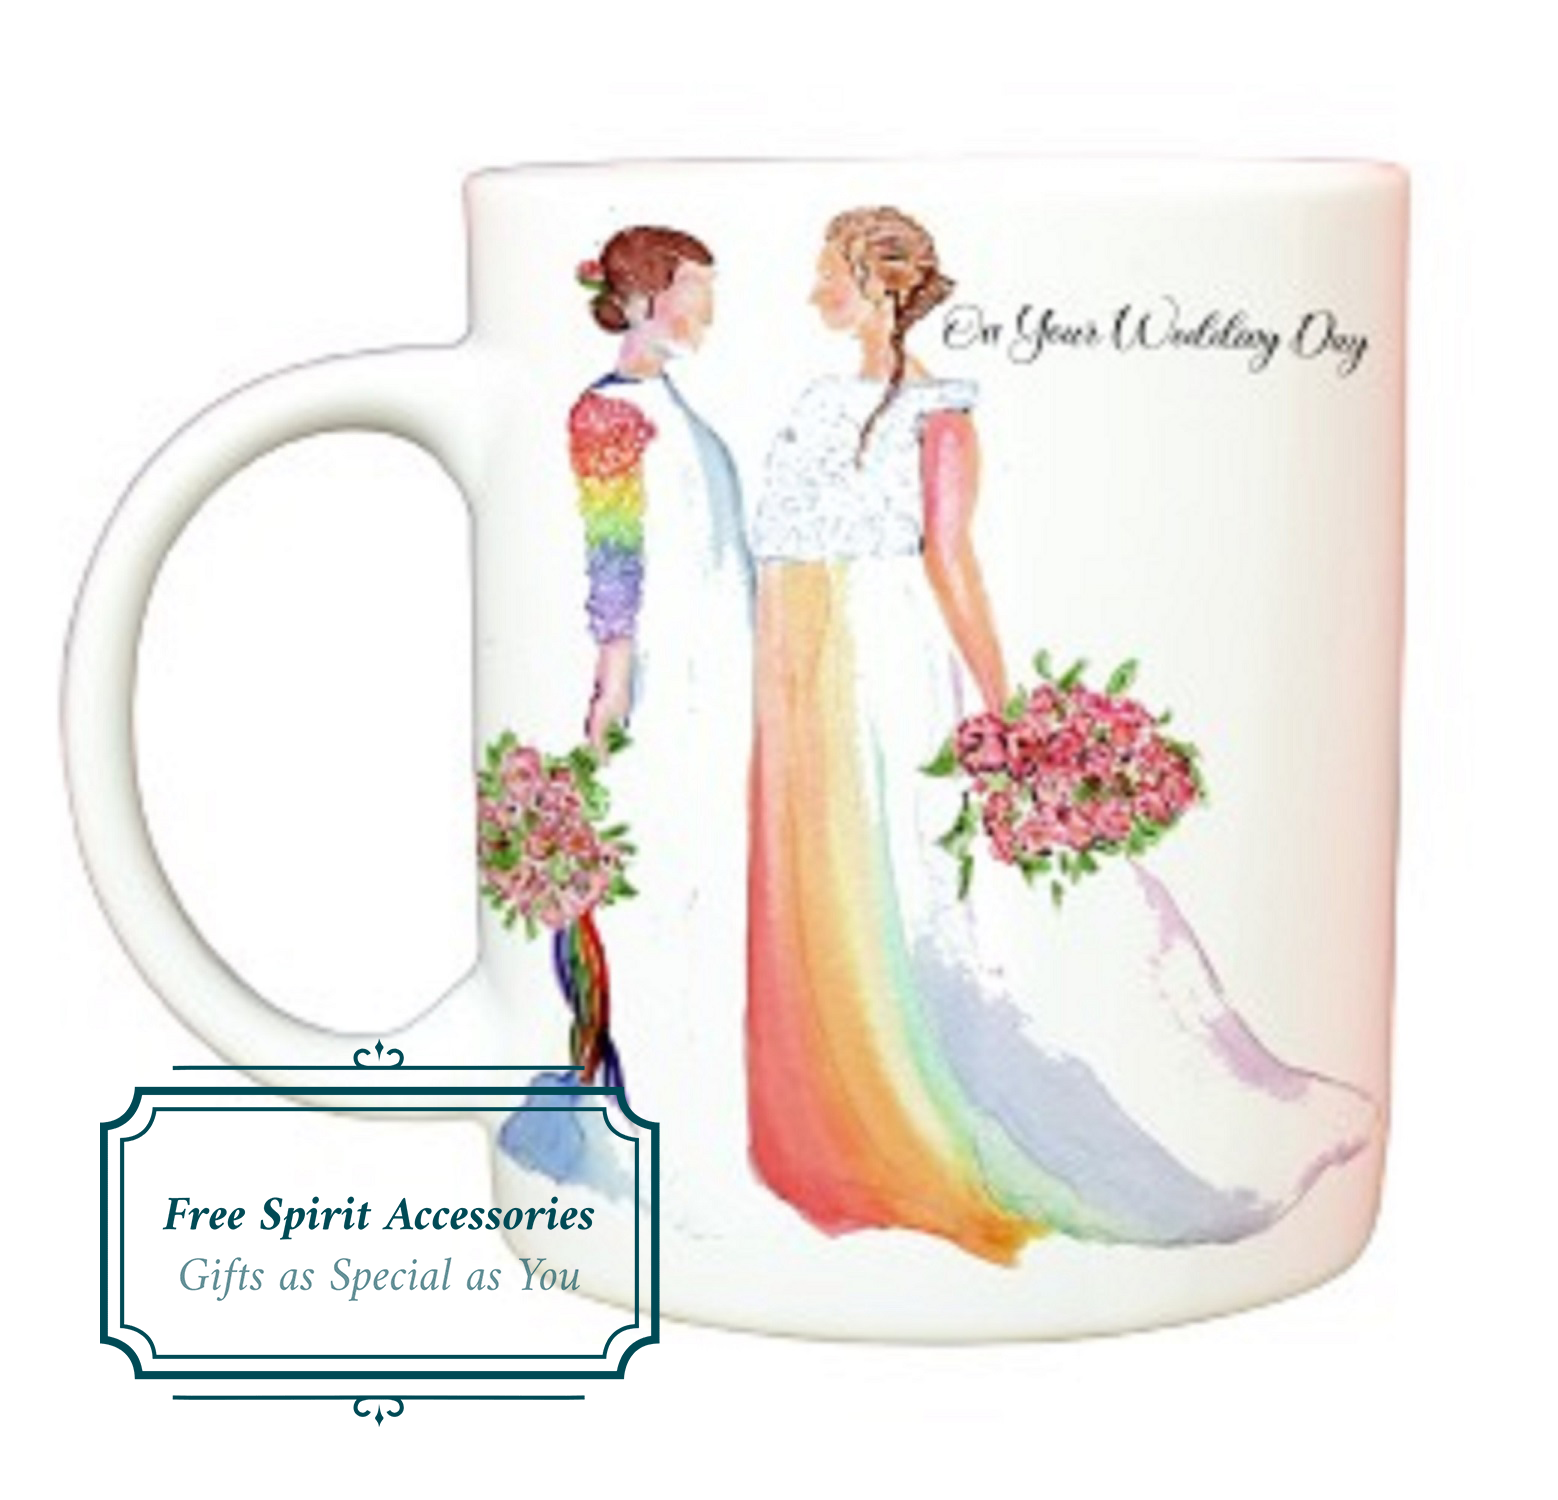  Wedding Day Two Brides Coffee Mug by Free Spirit Accessories sold by Free Spirit Accessories